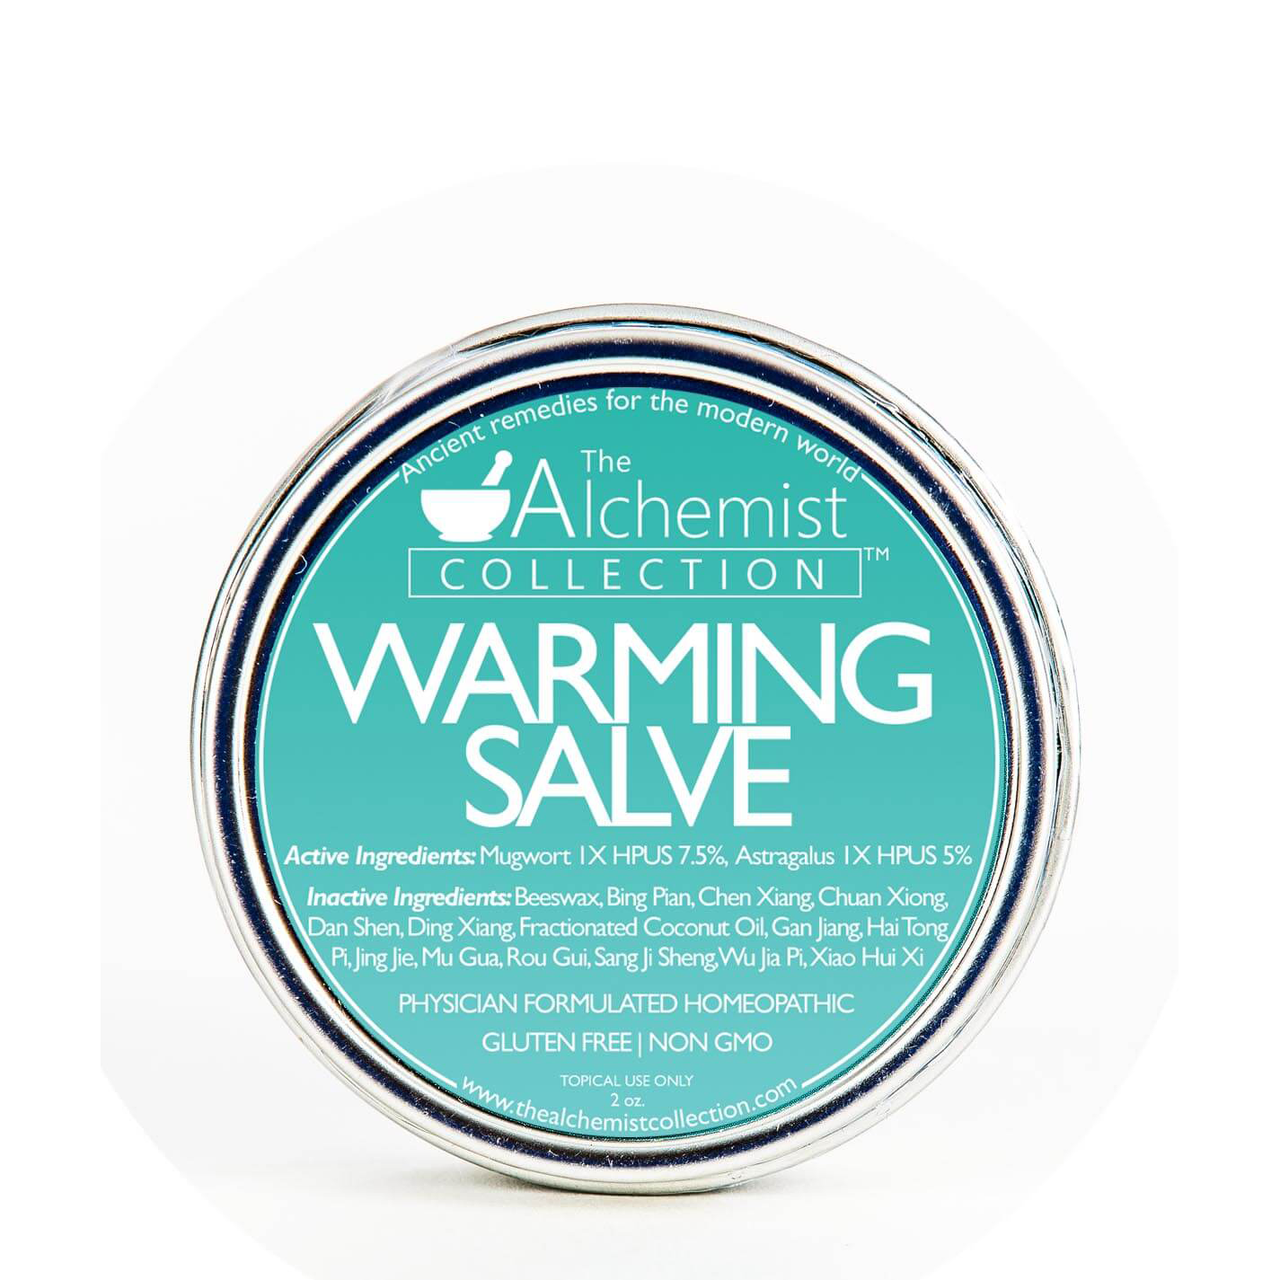 Warming Salve - The Alchemist Collection